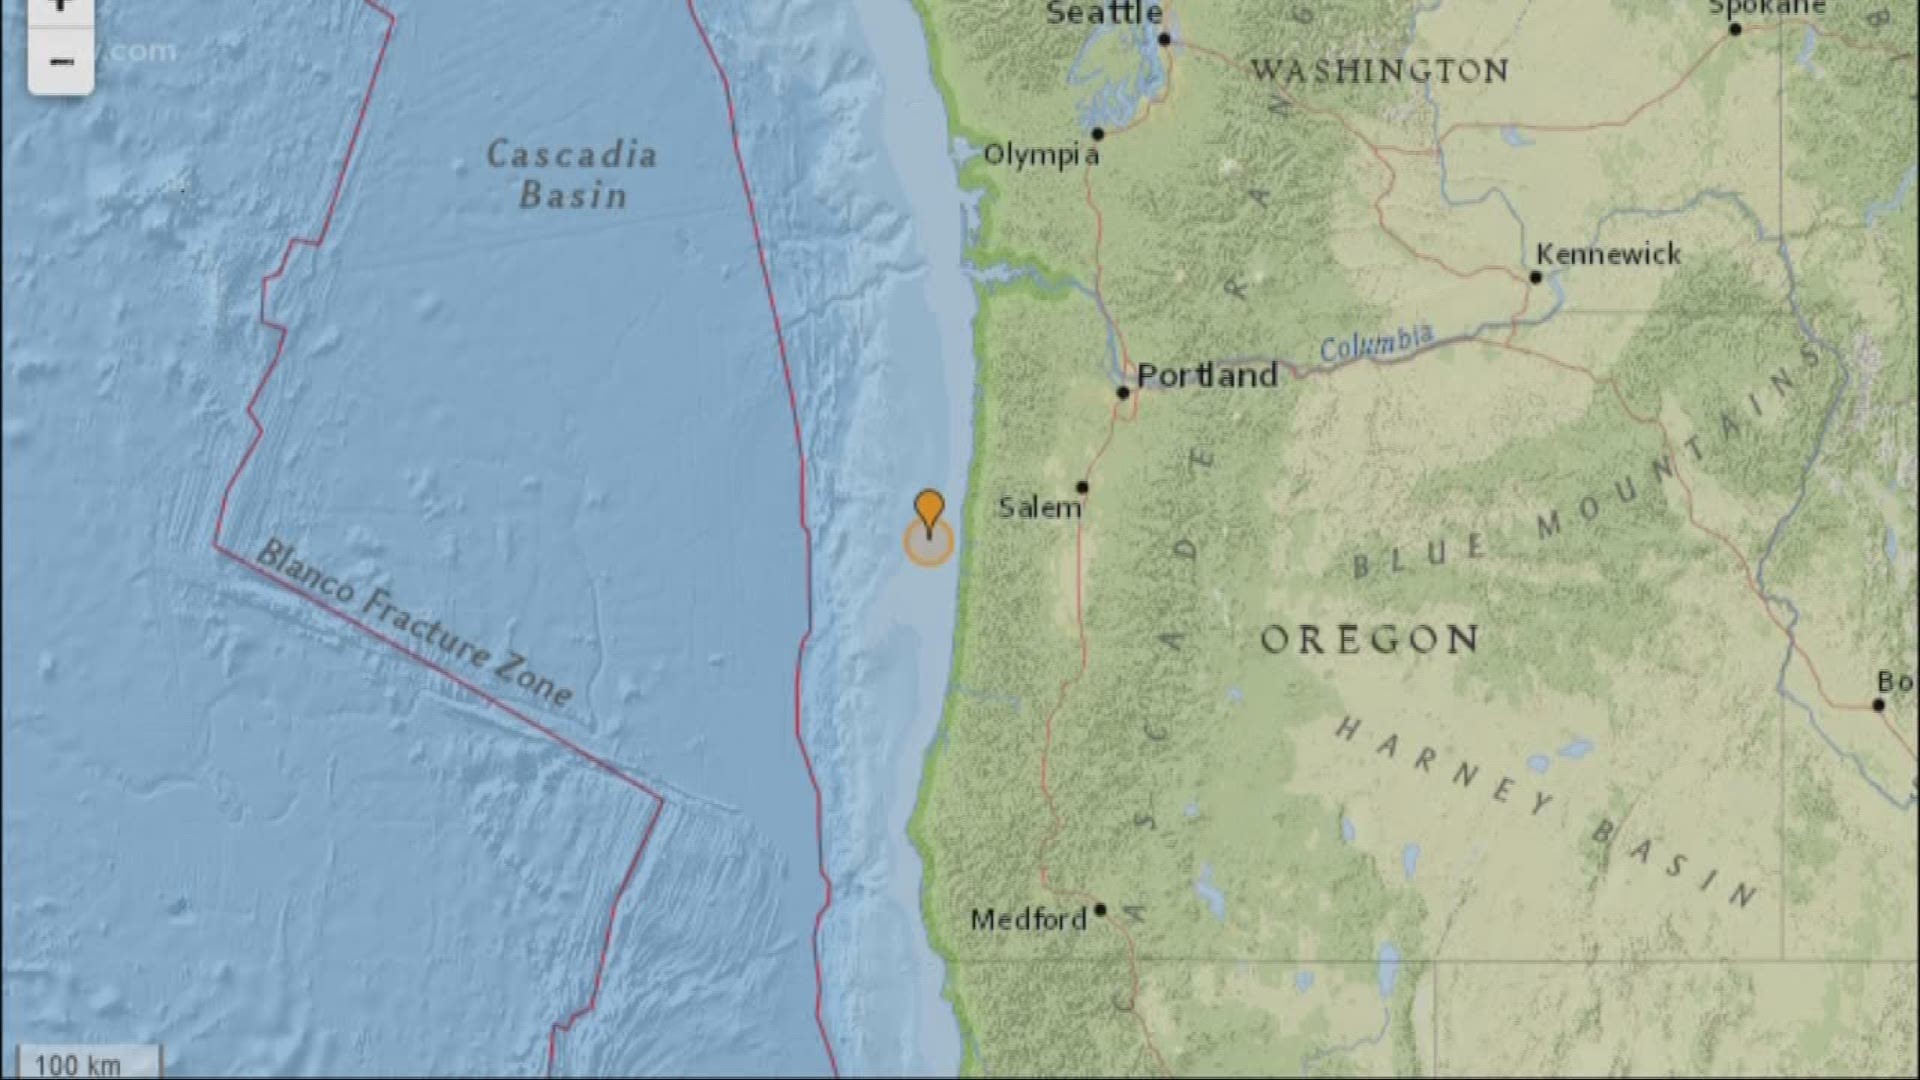 More off-shore quakes in the Pacific Ocean.